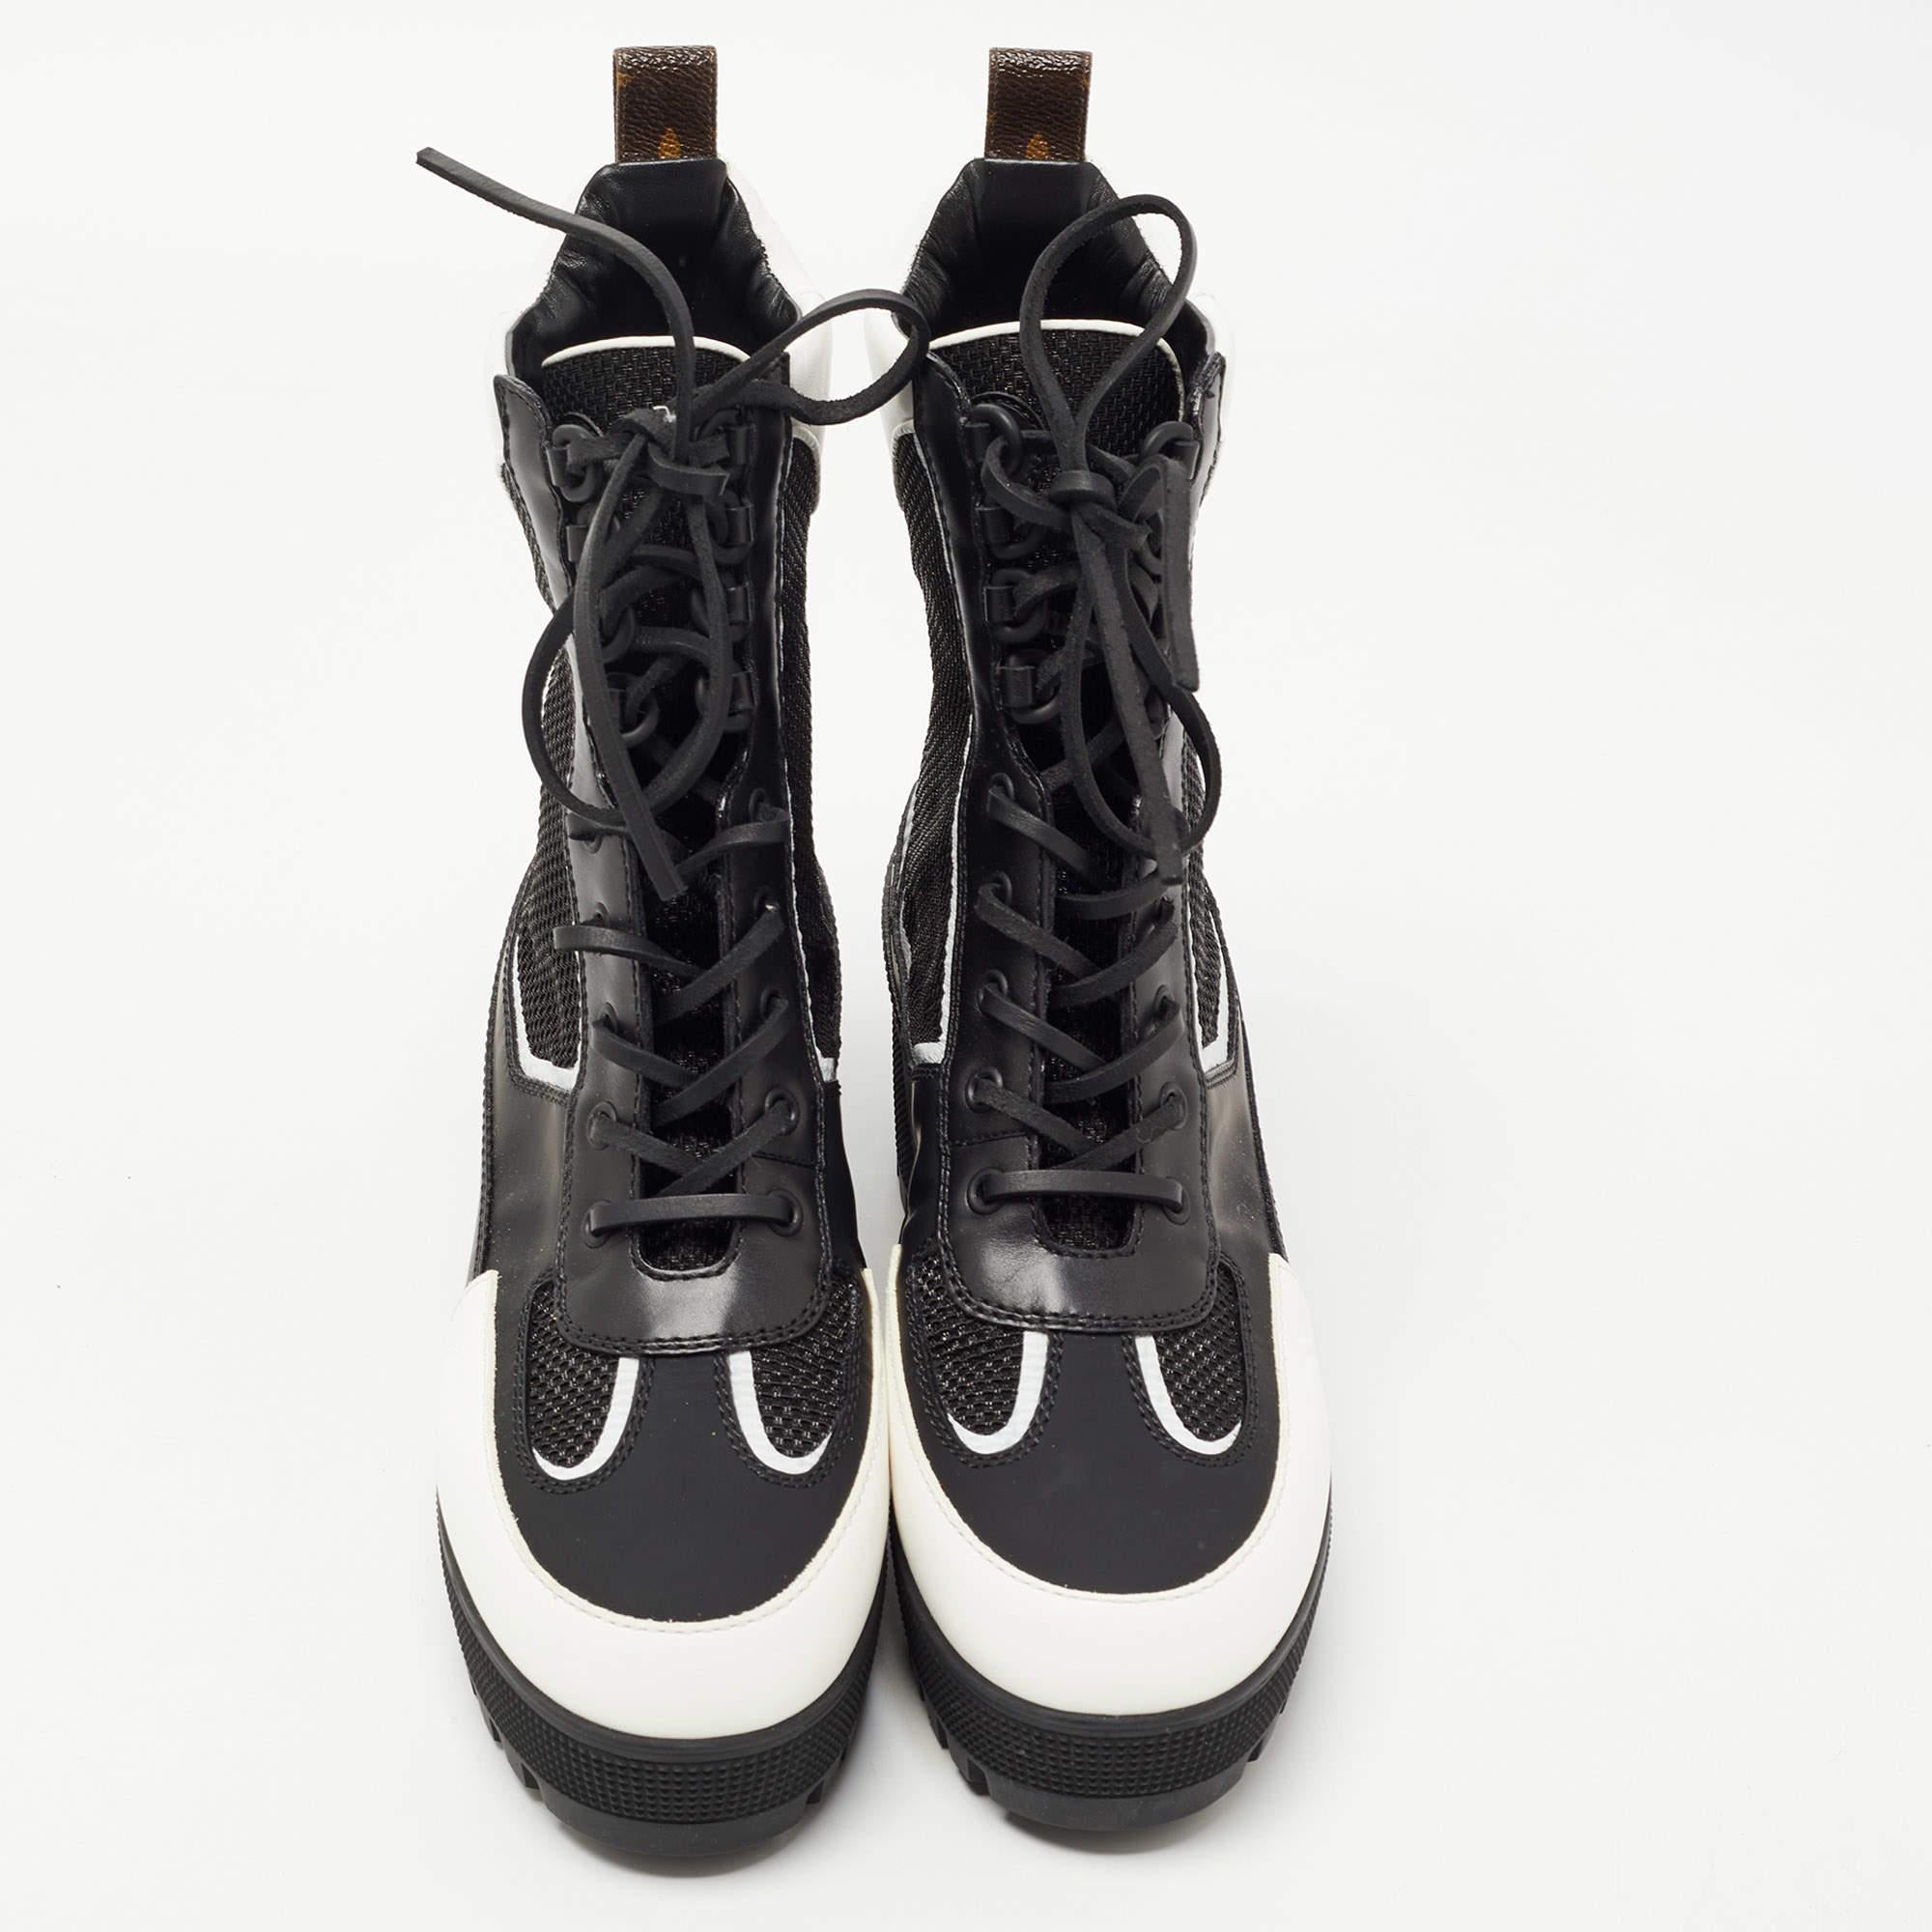 Louis Vuitton - Authenticated Metropolis Ankle Boots - Leather Black for Women, Good Condition